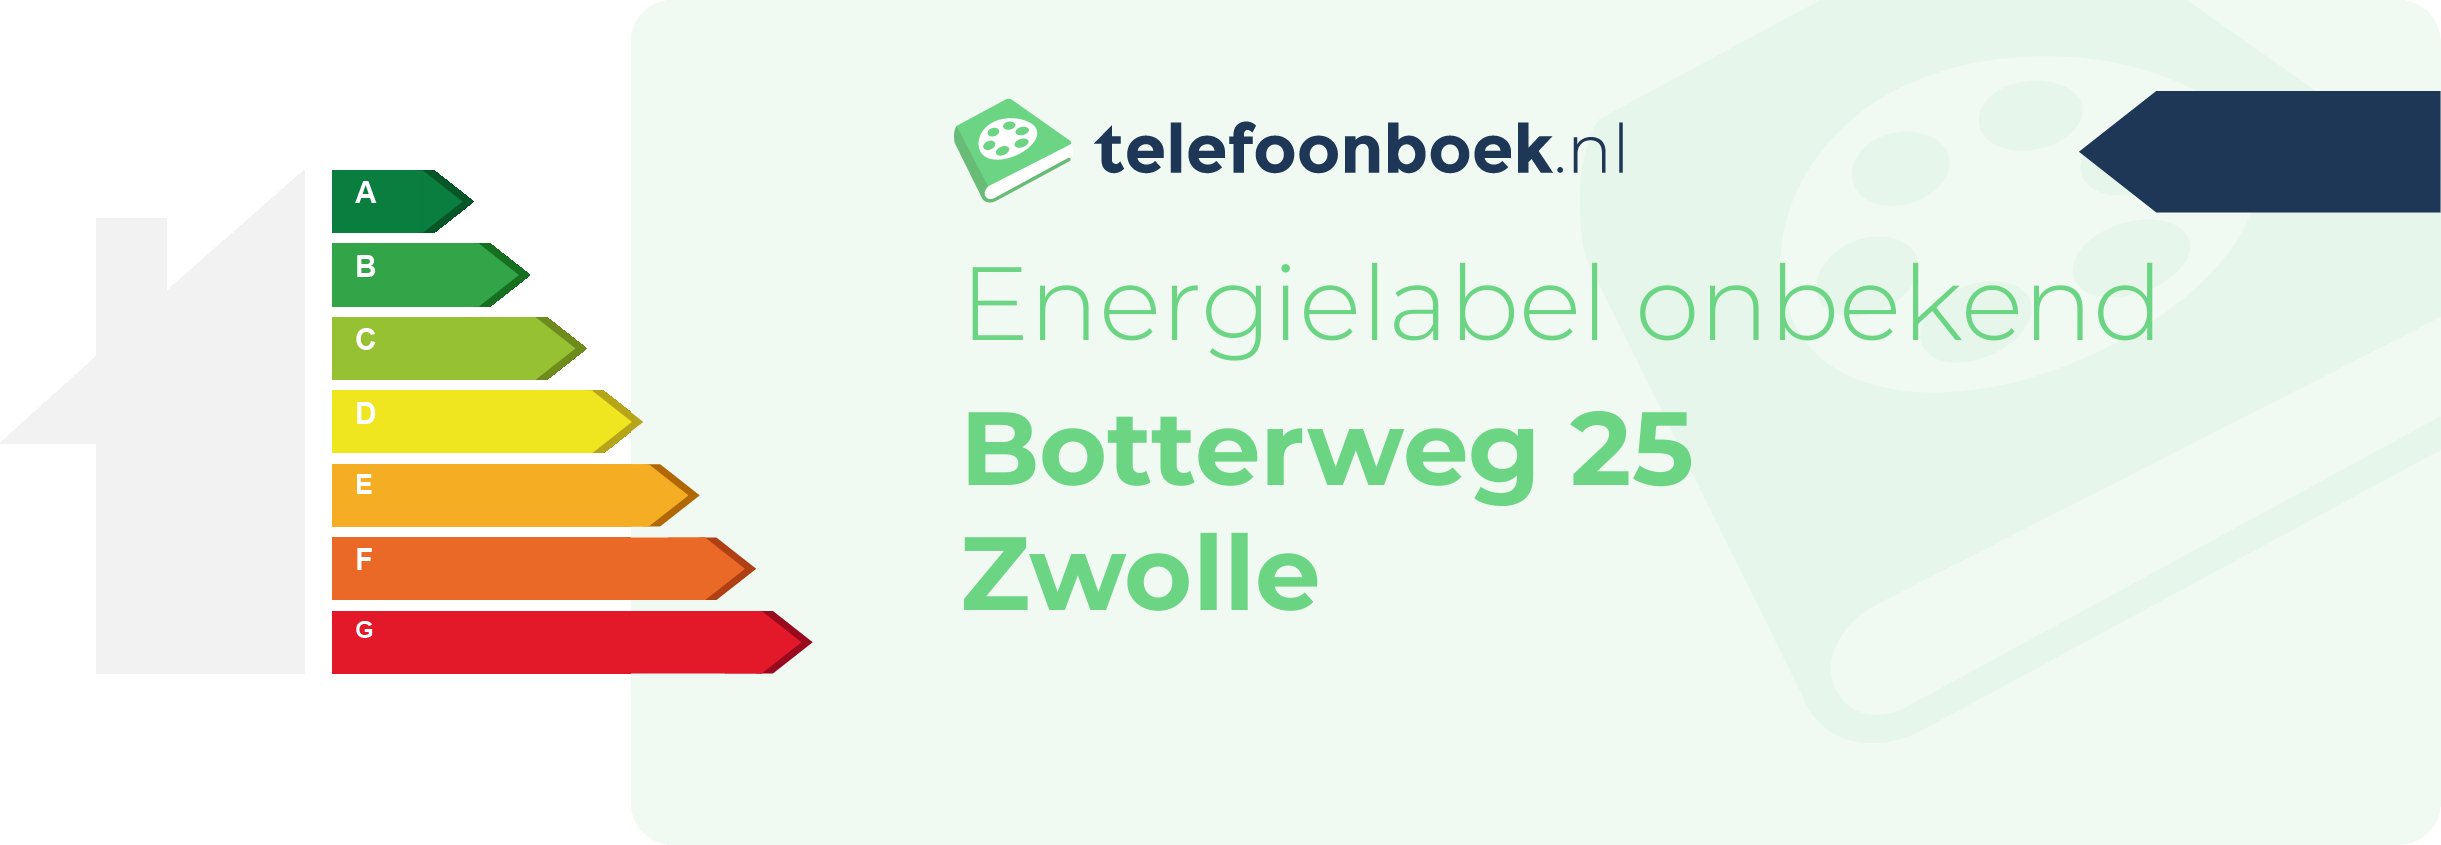 Energielabel Botterweg 25 Zwolle